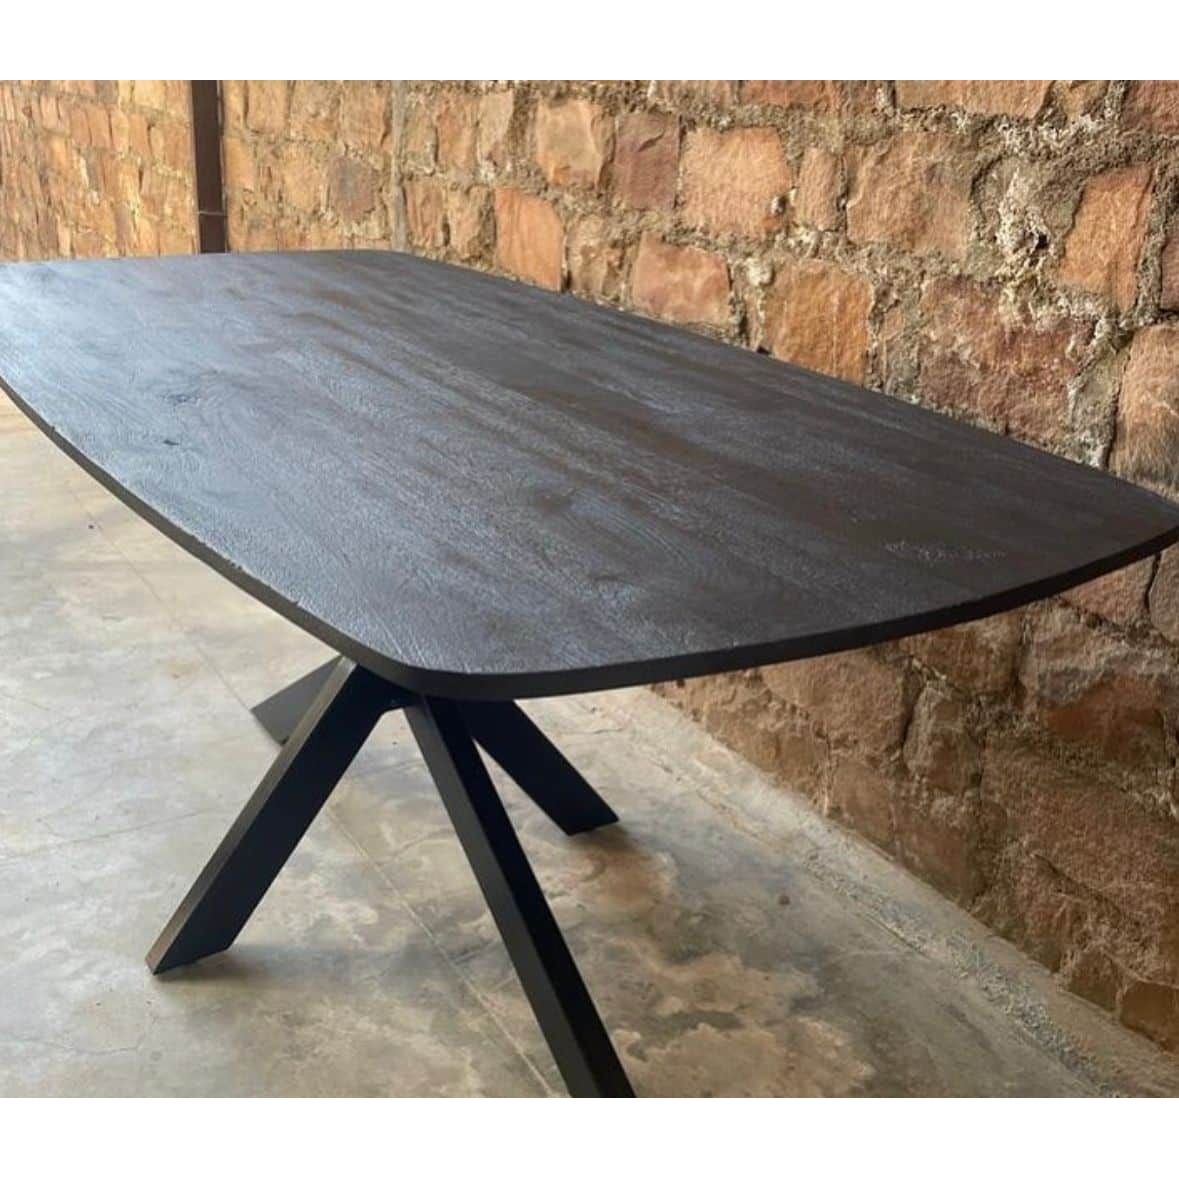 Bahia table Danish oval black - 220cm